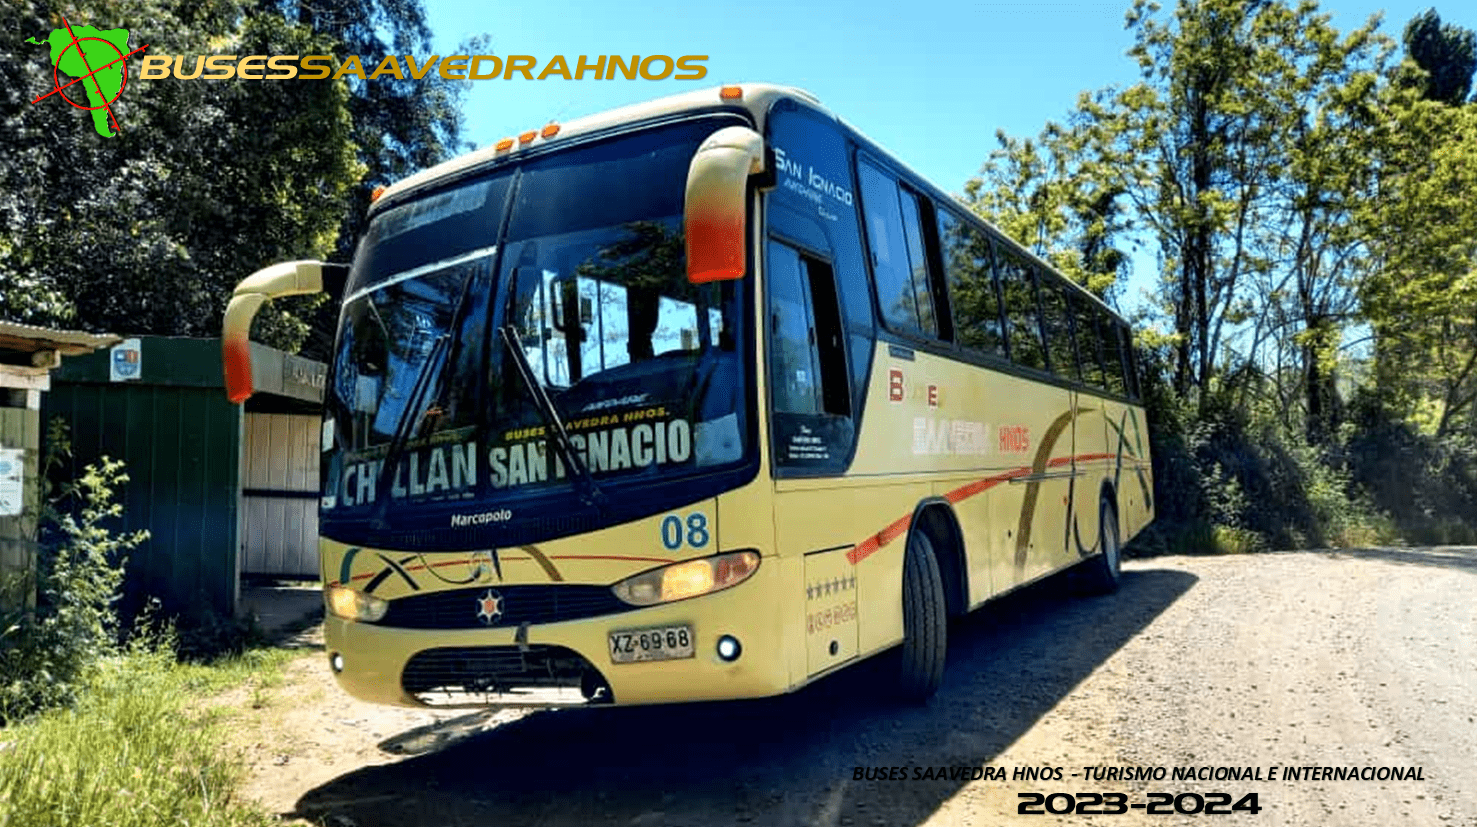 Buses Saavedra Hnos - Turismo - 15-min